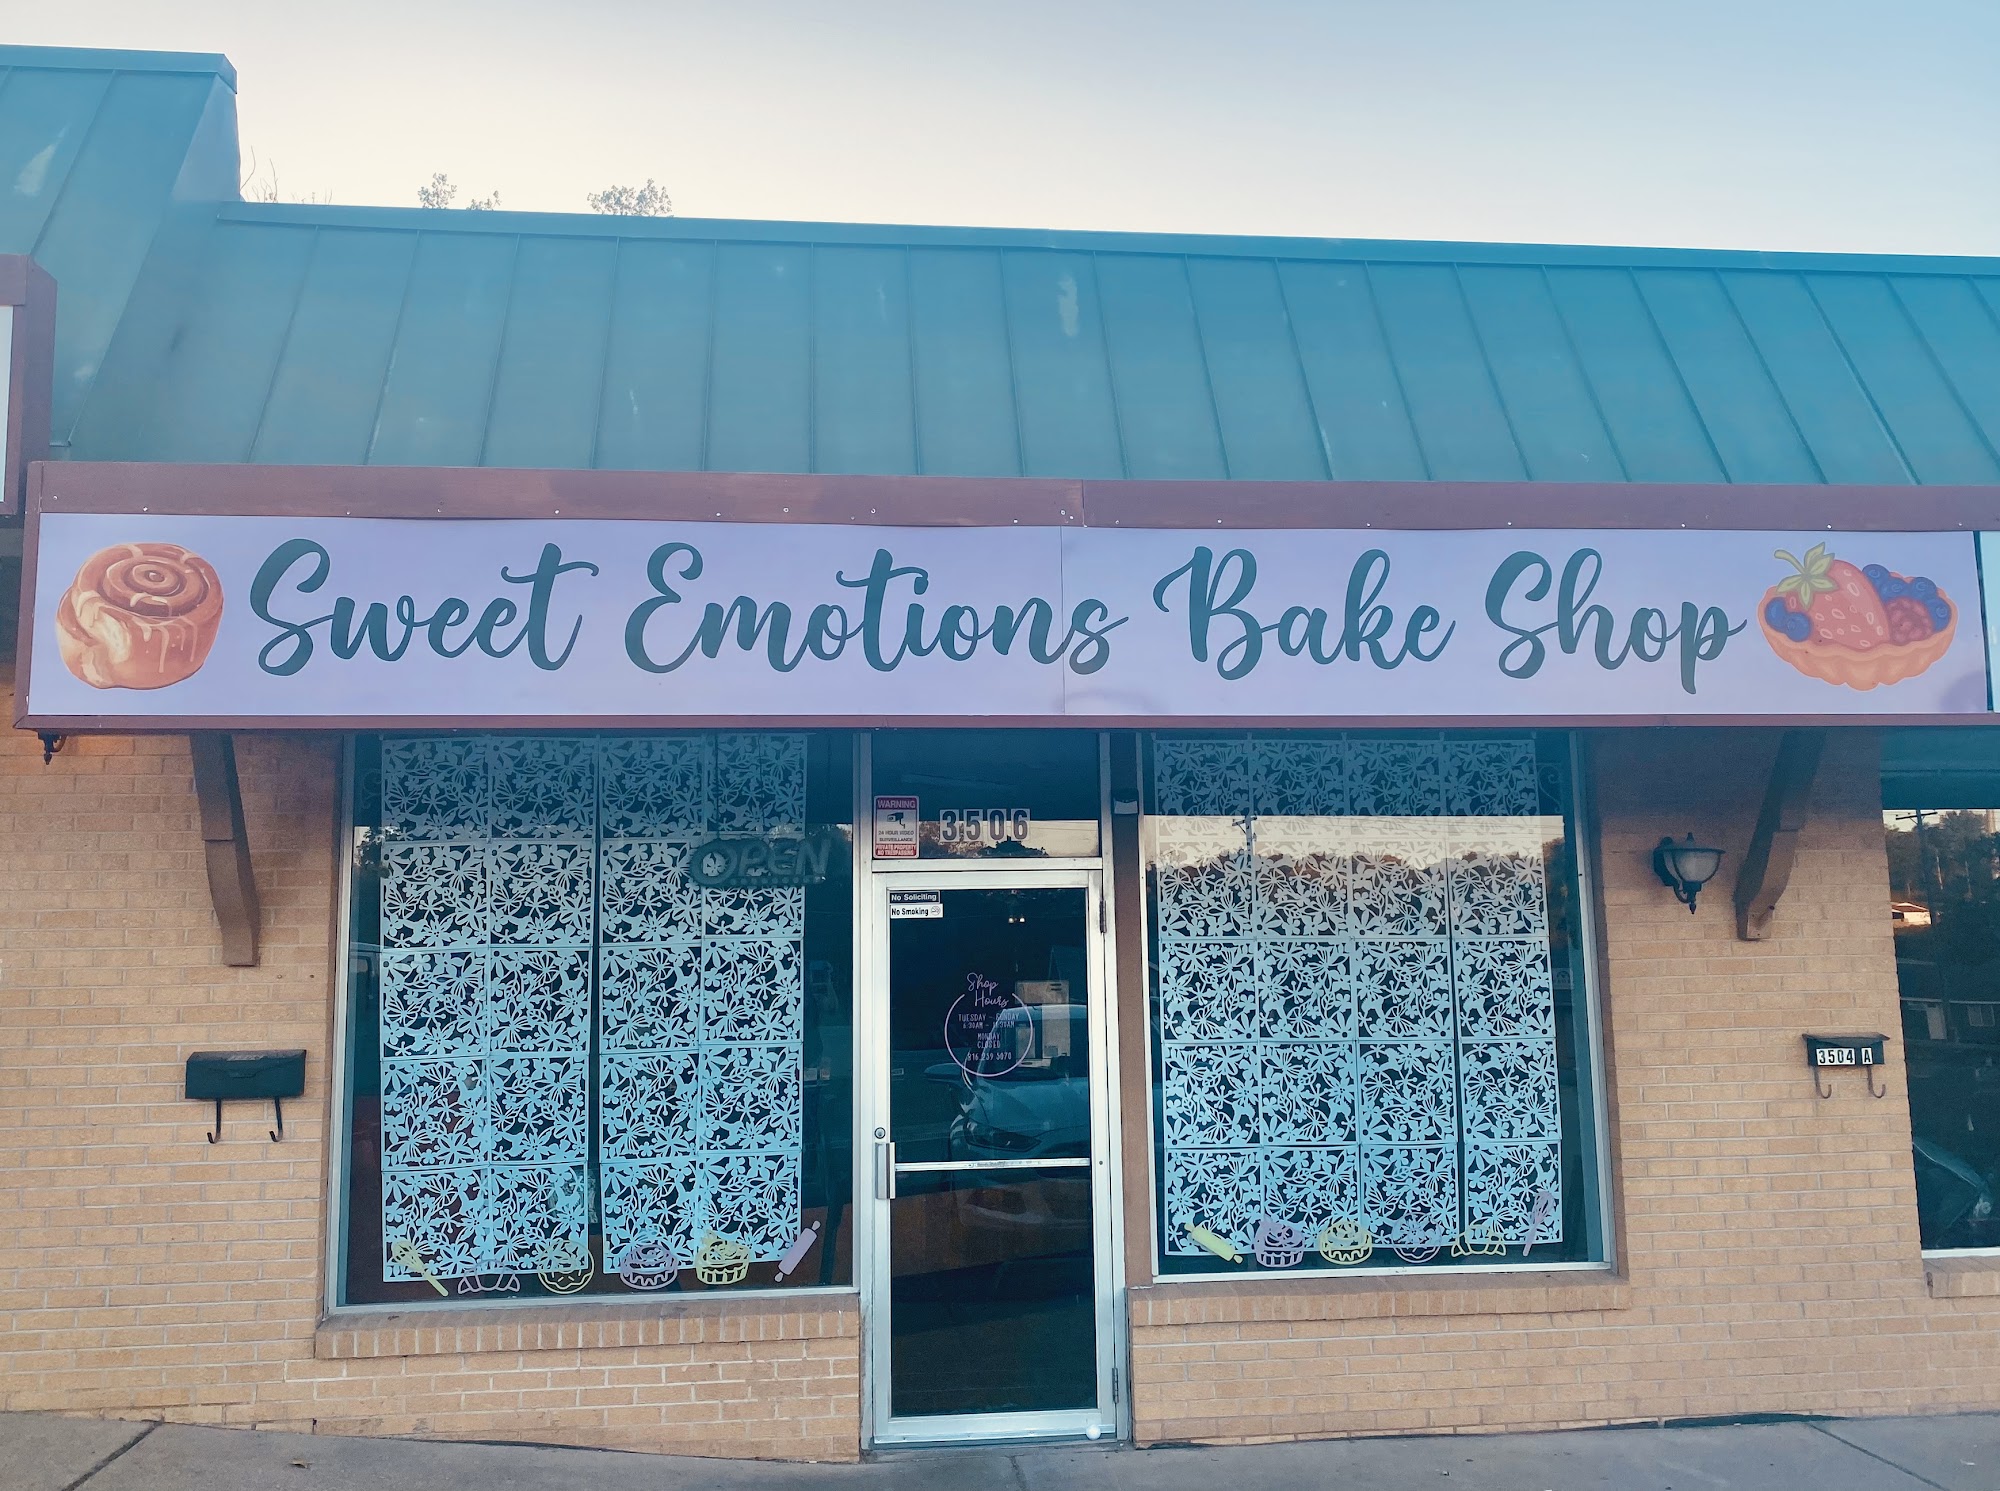 Sweet Emotions Bake Shop